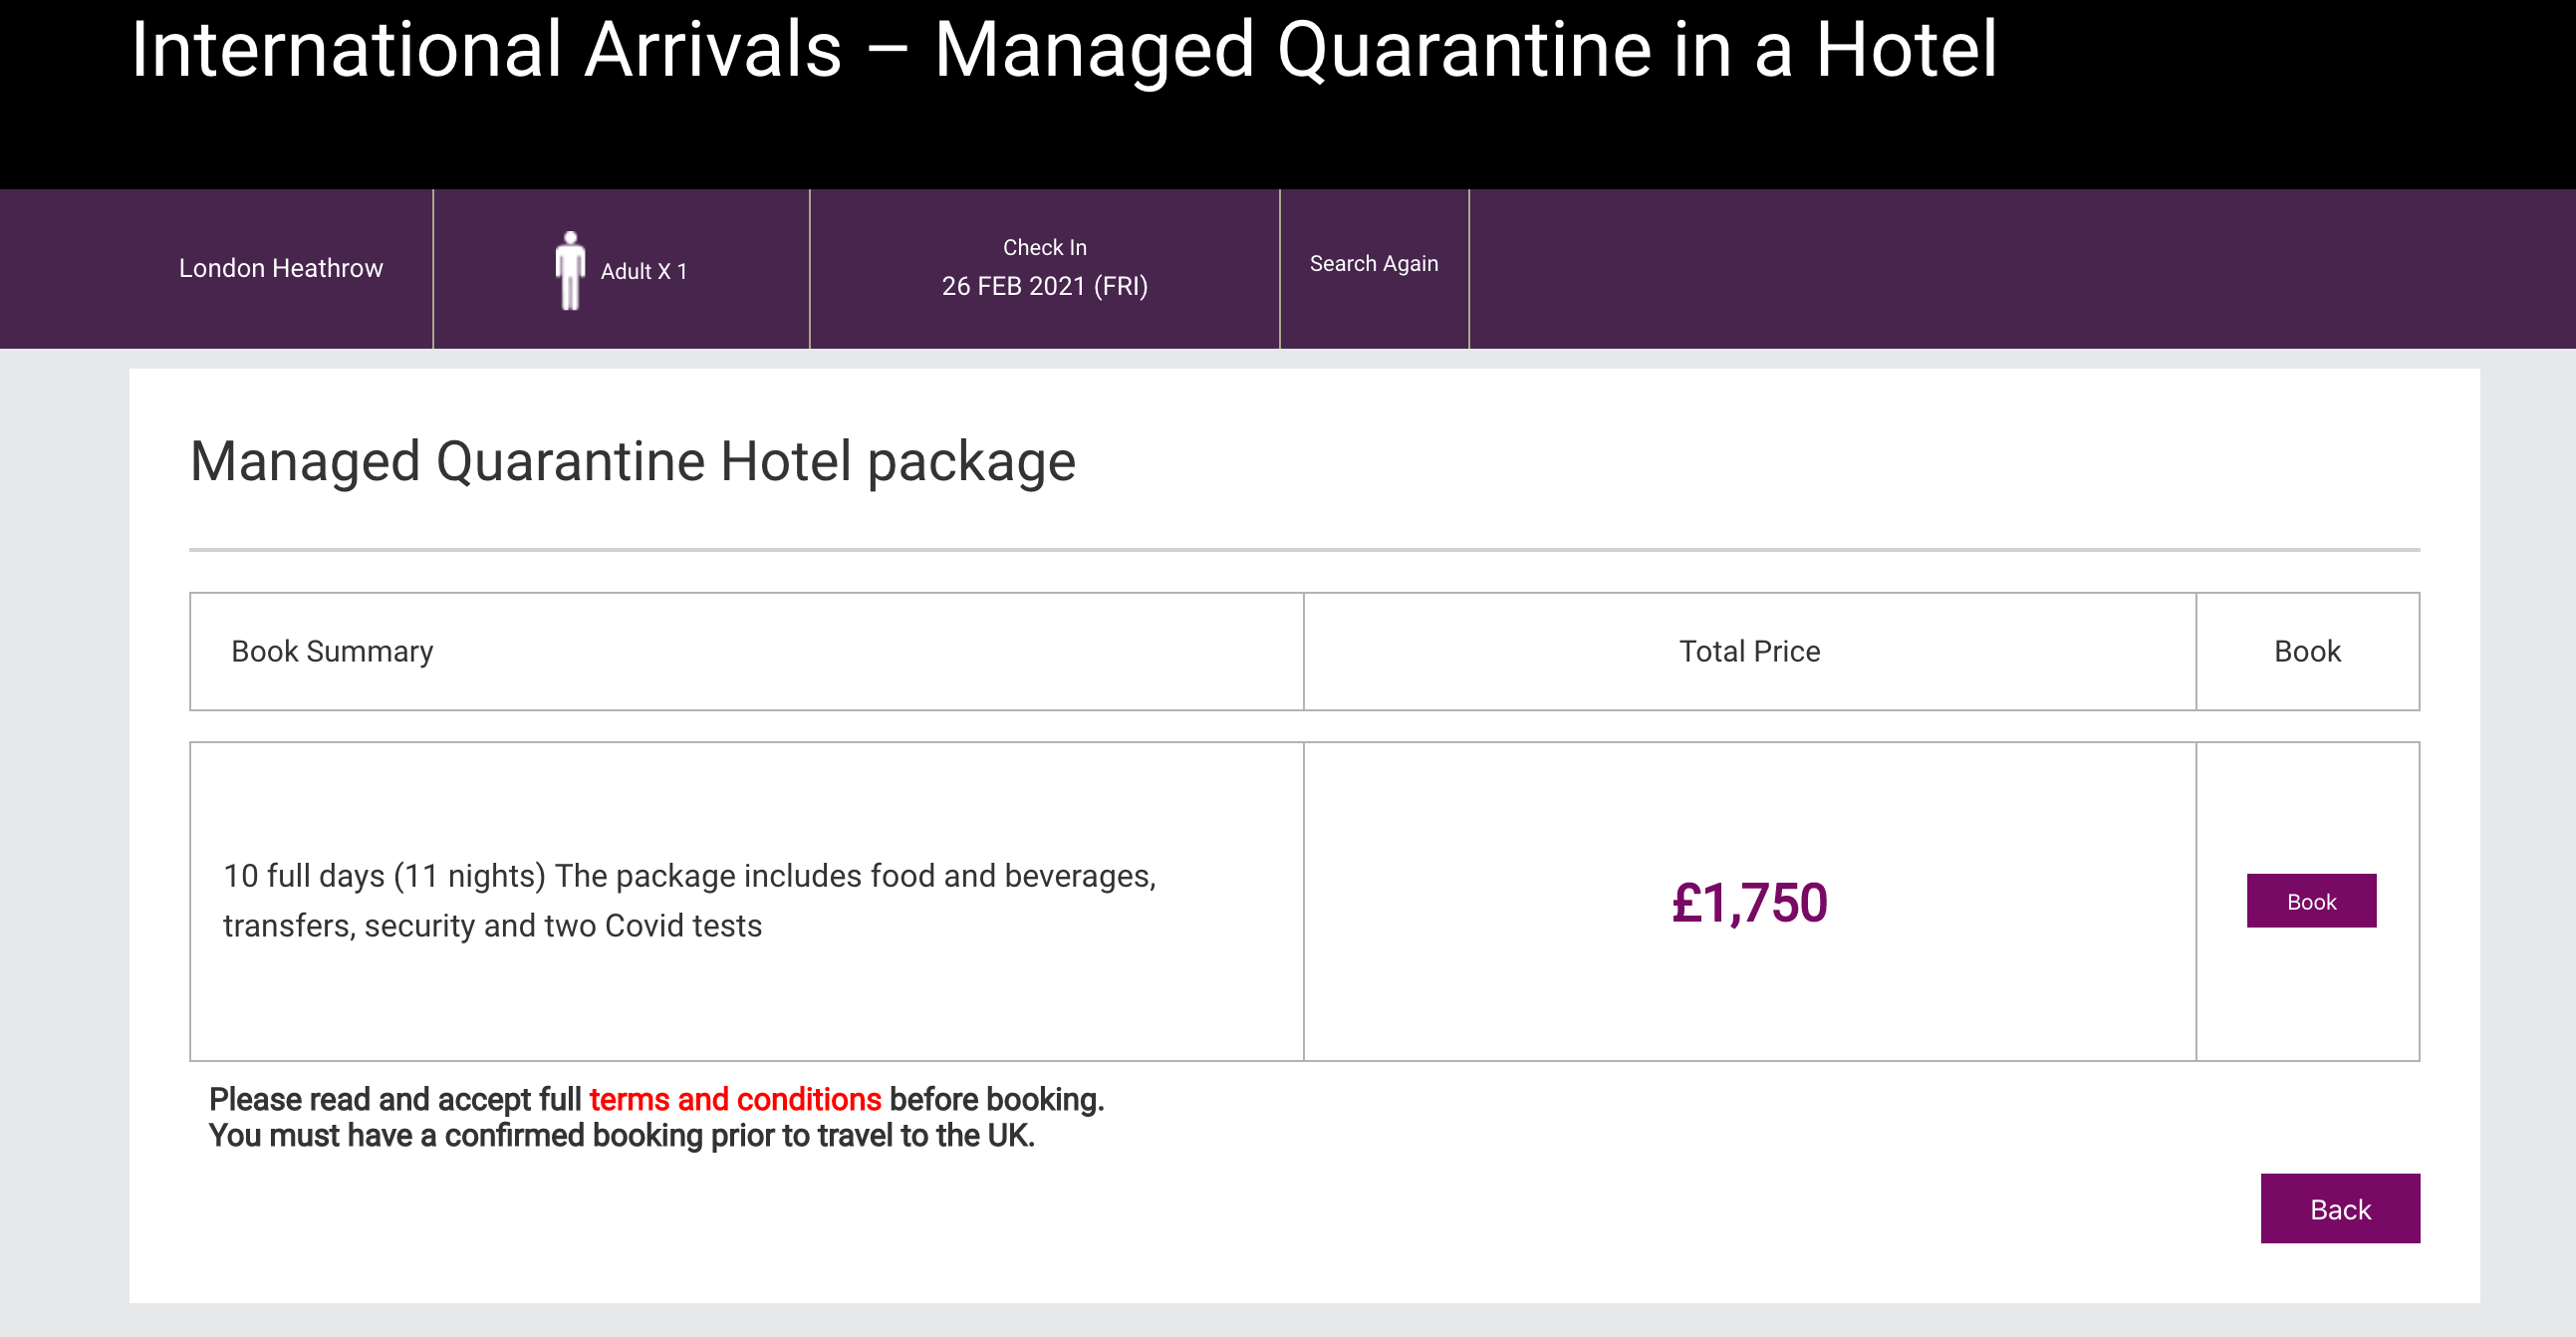 How Do I Book My Hotel Quarantine Stay